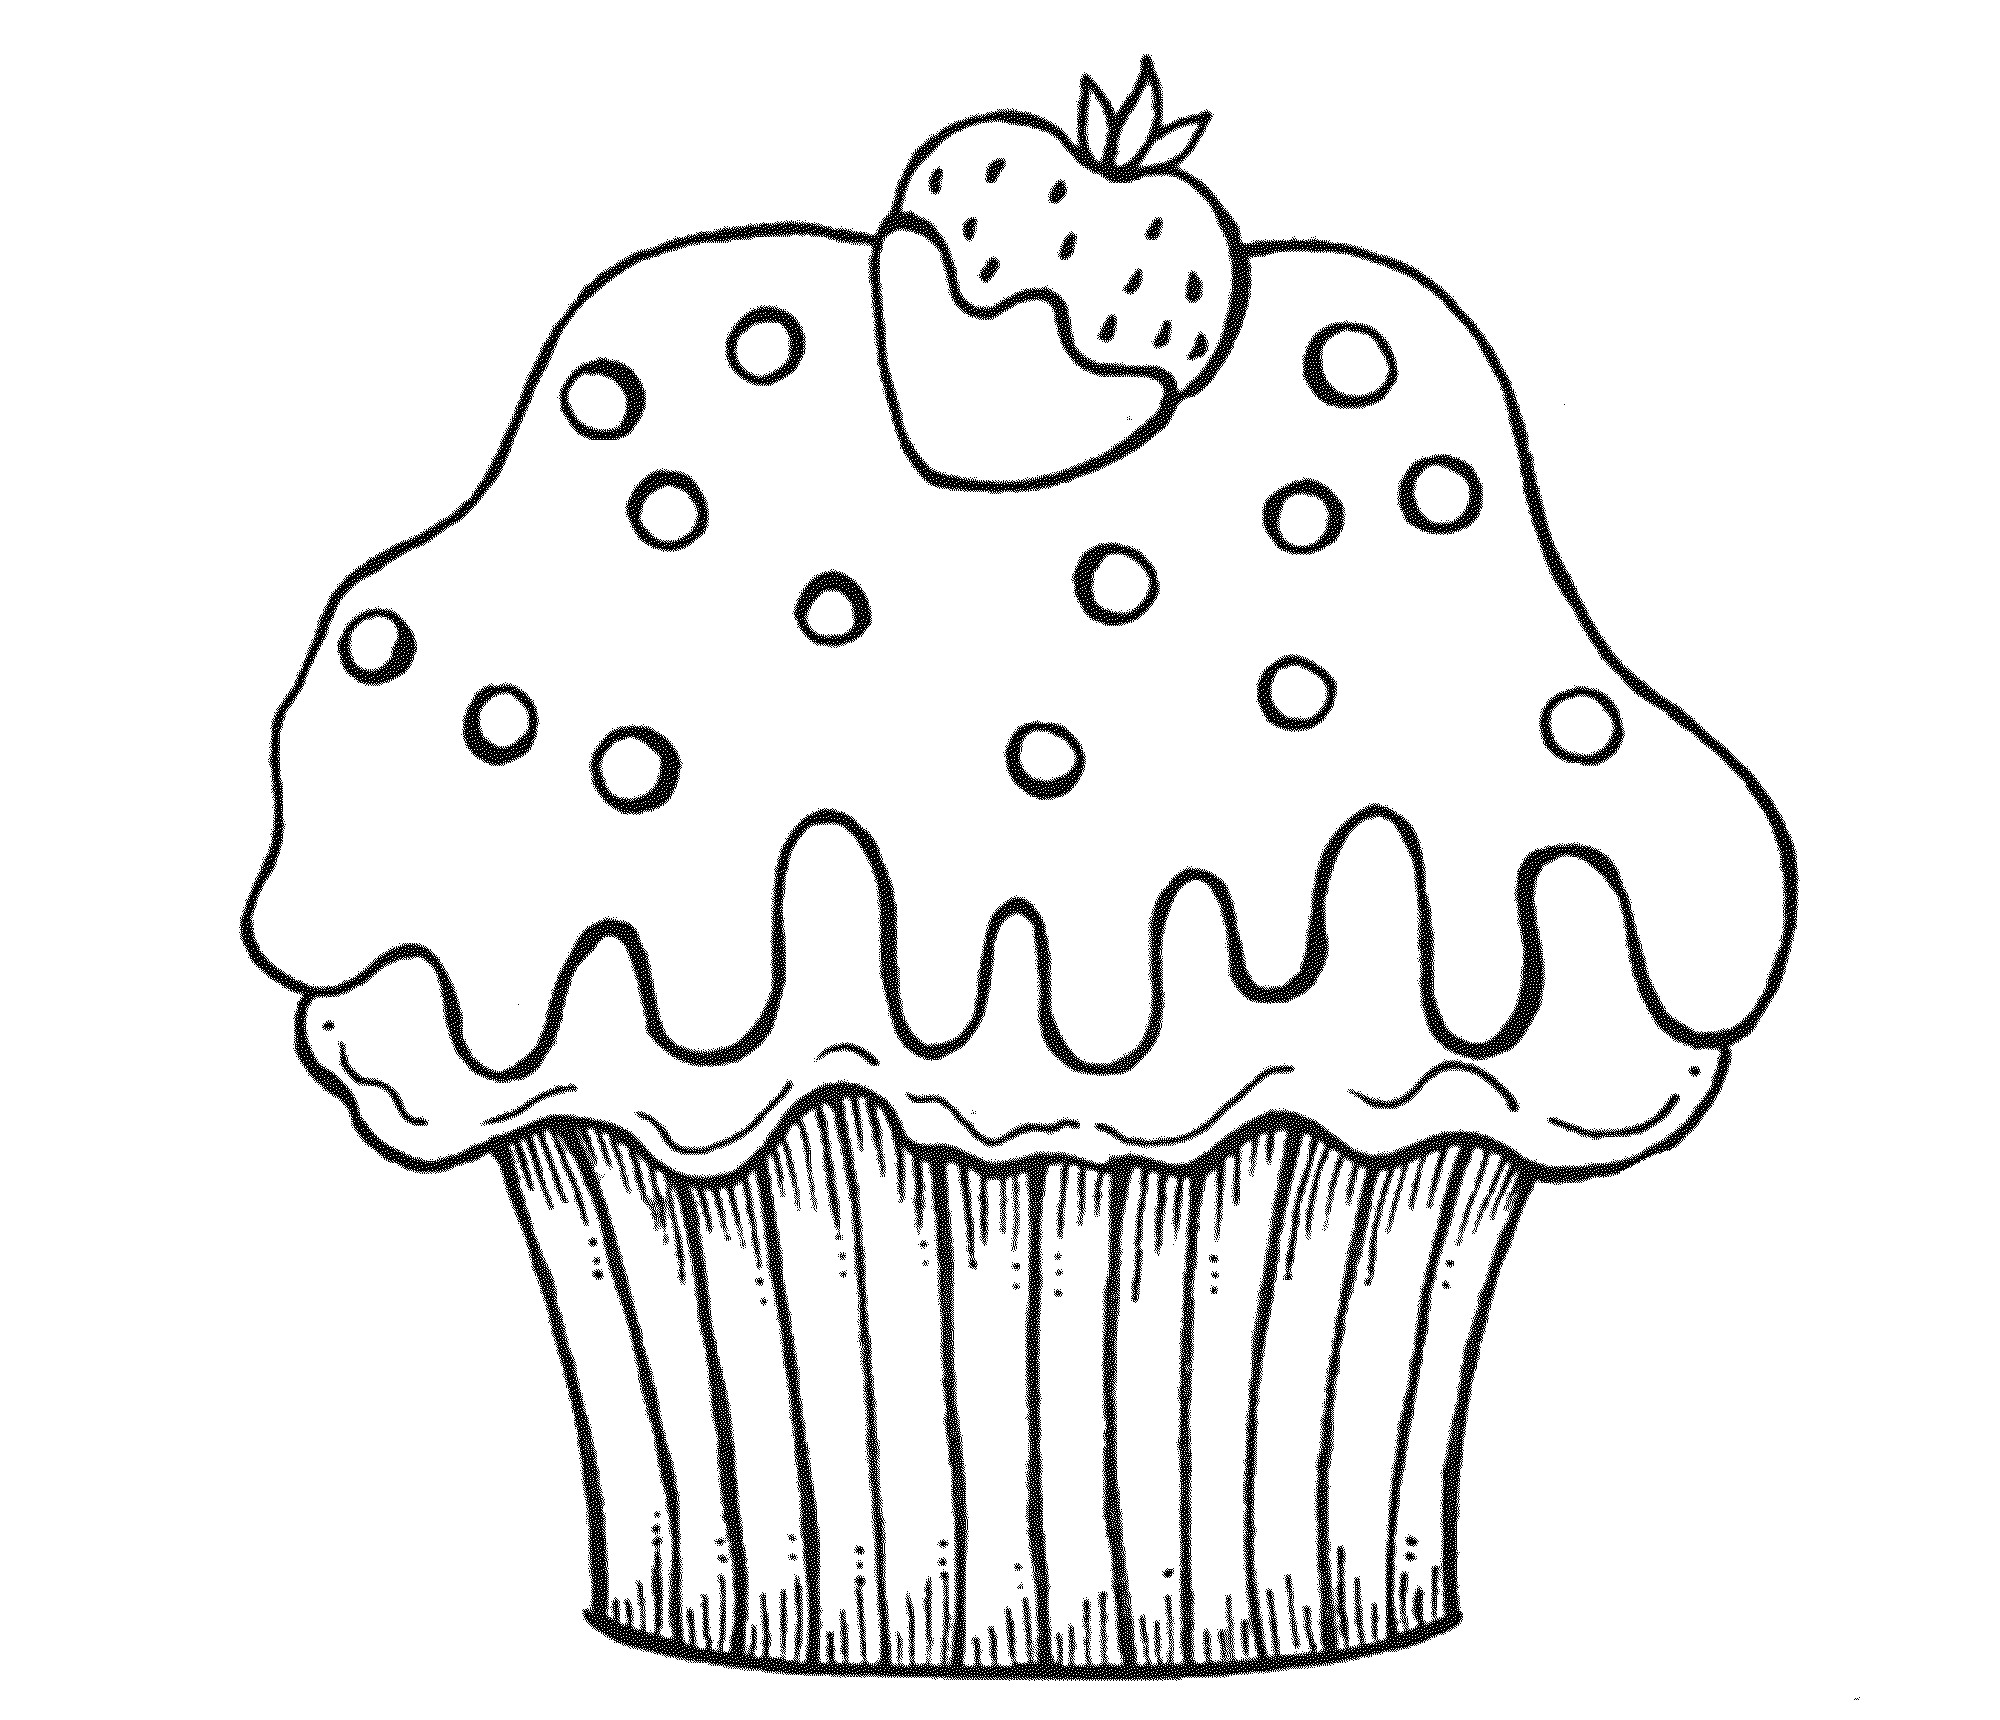 Cute Cupcake Coloring Pages at Free printable